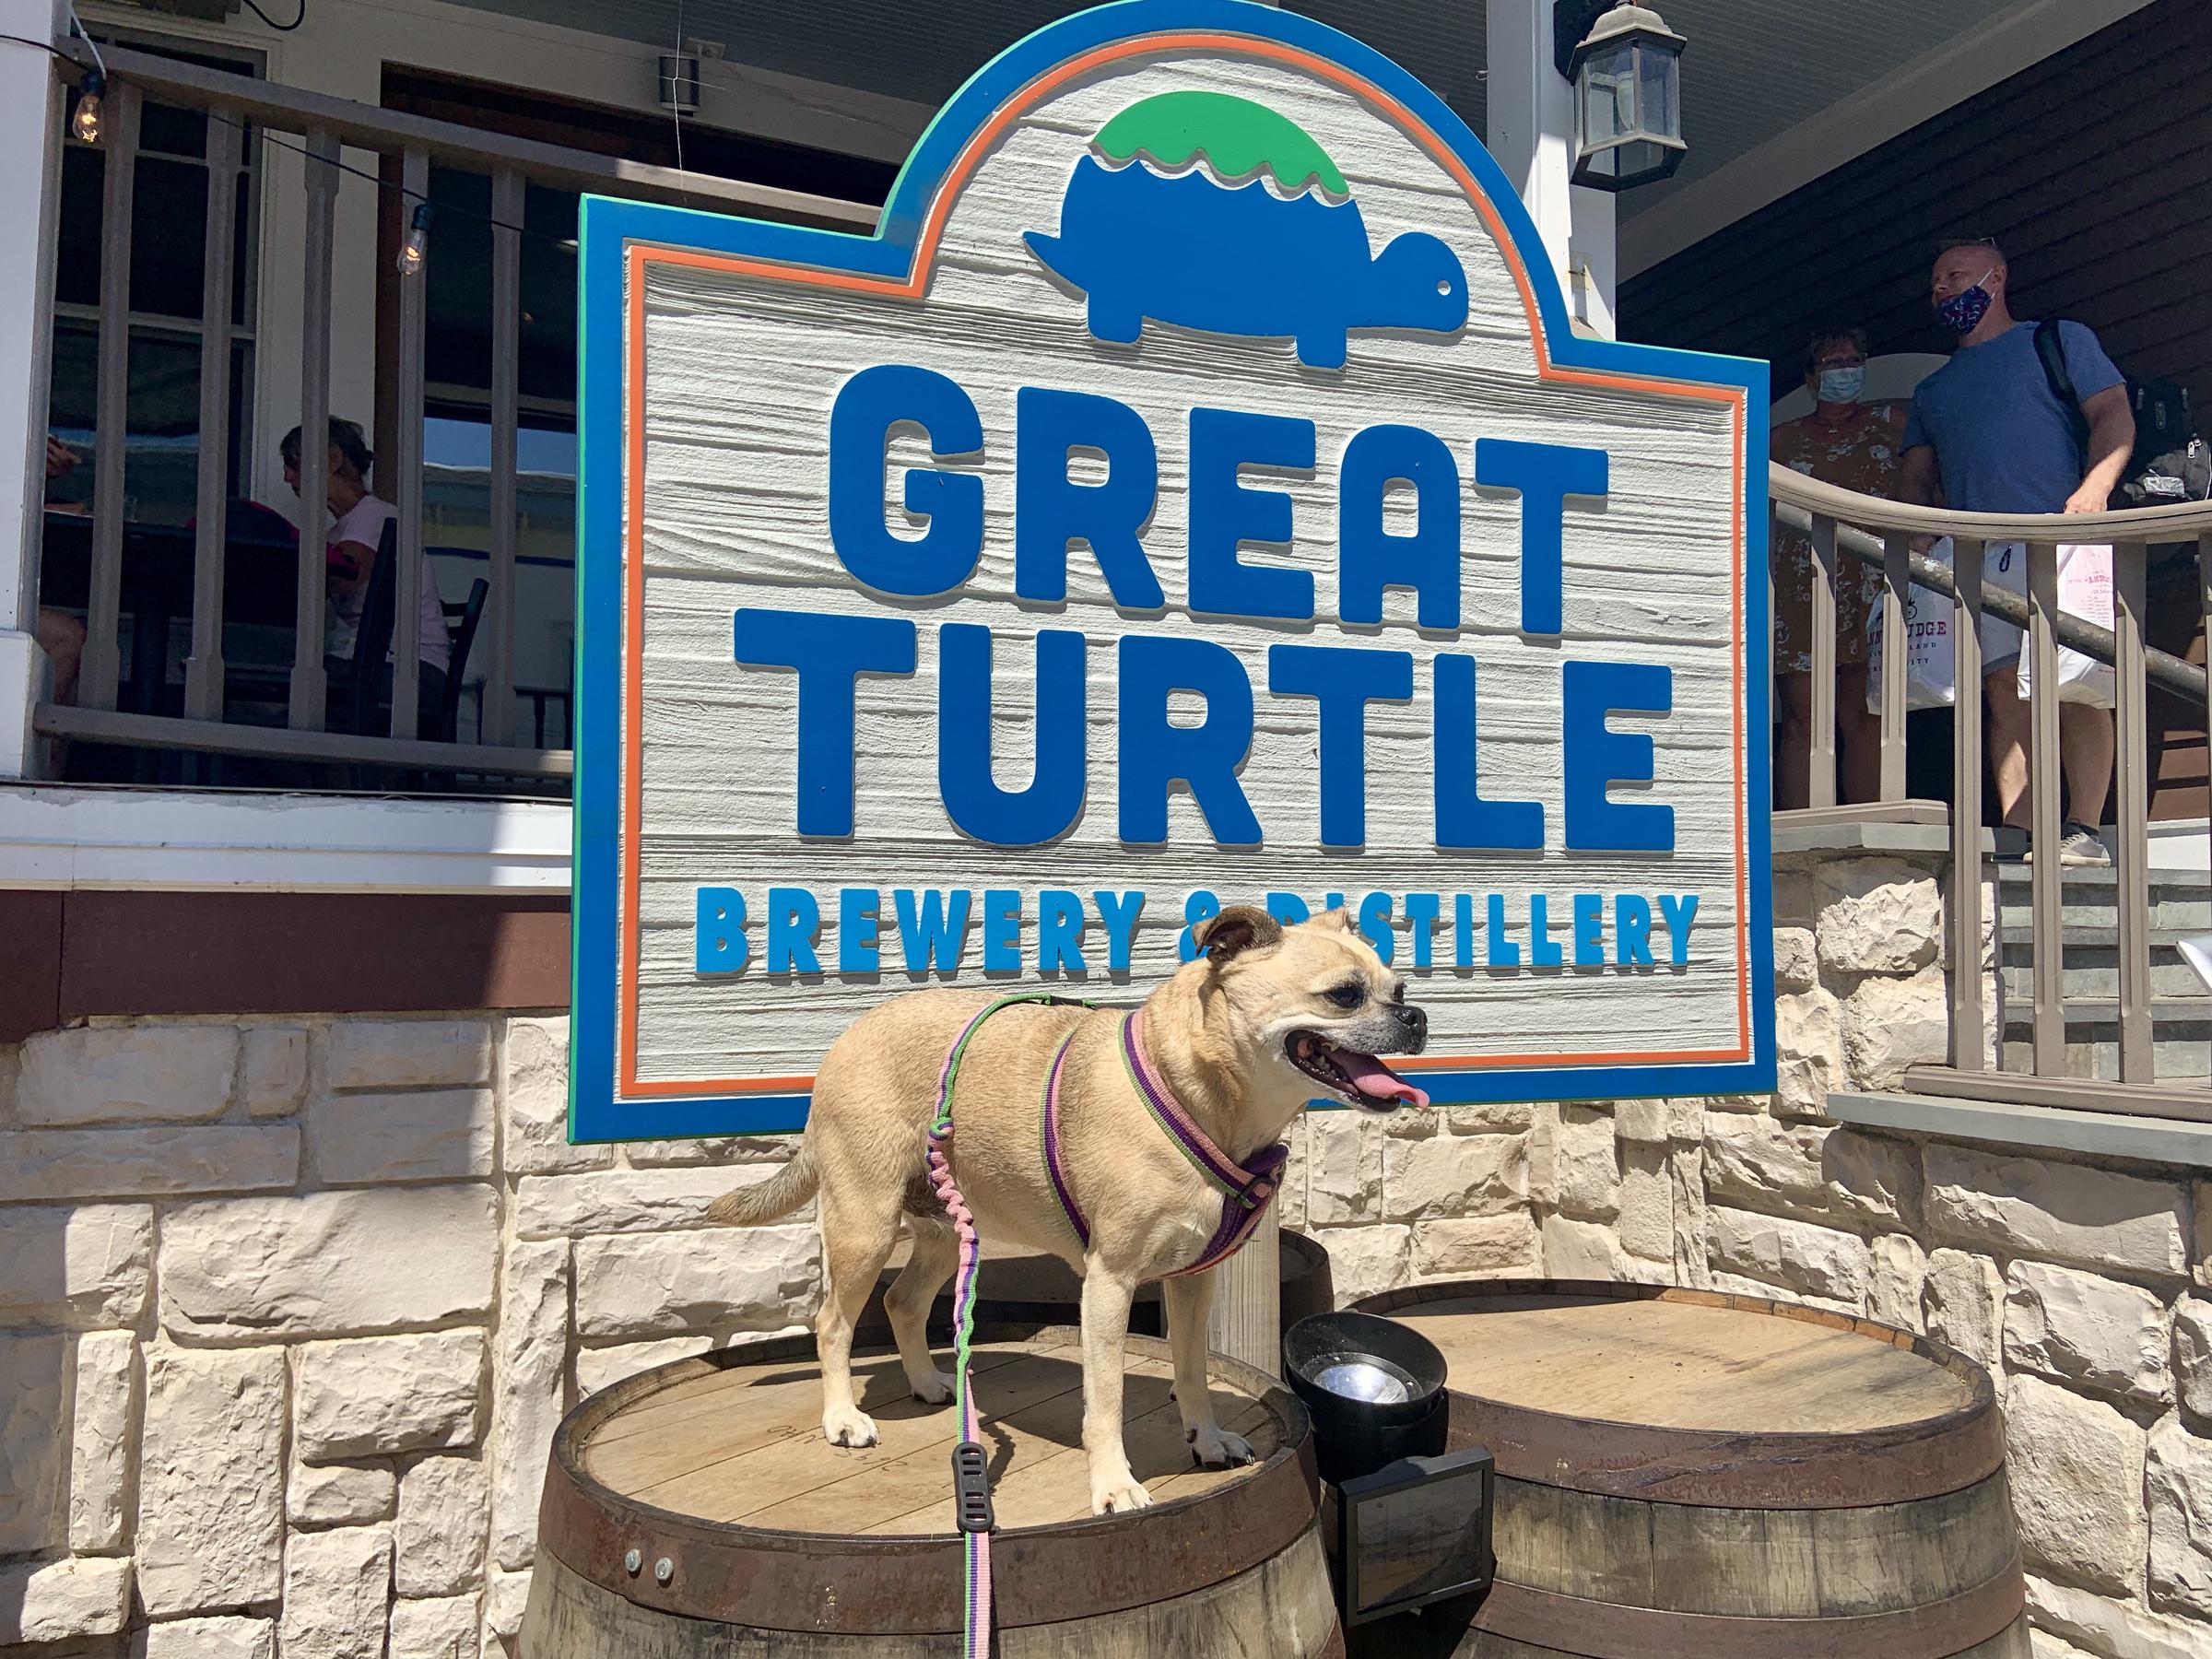 Pet Friendly Great Turtle Brewery & Distillery